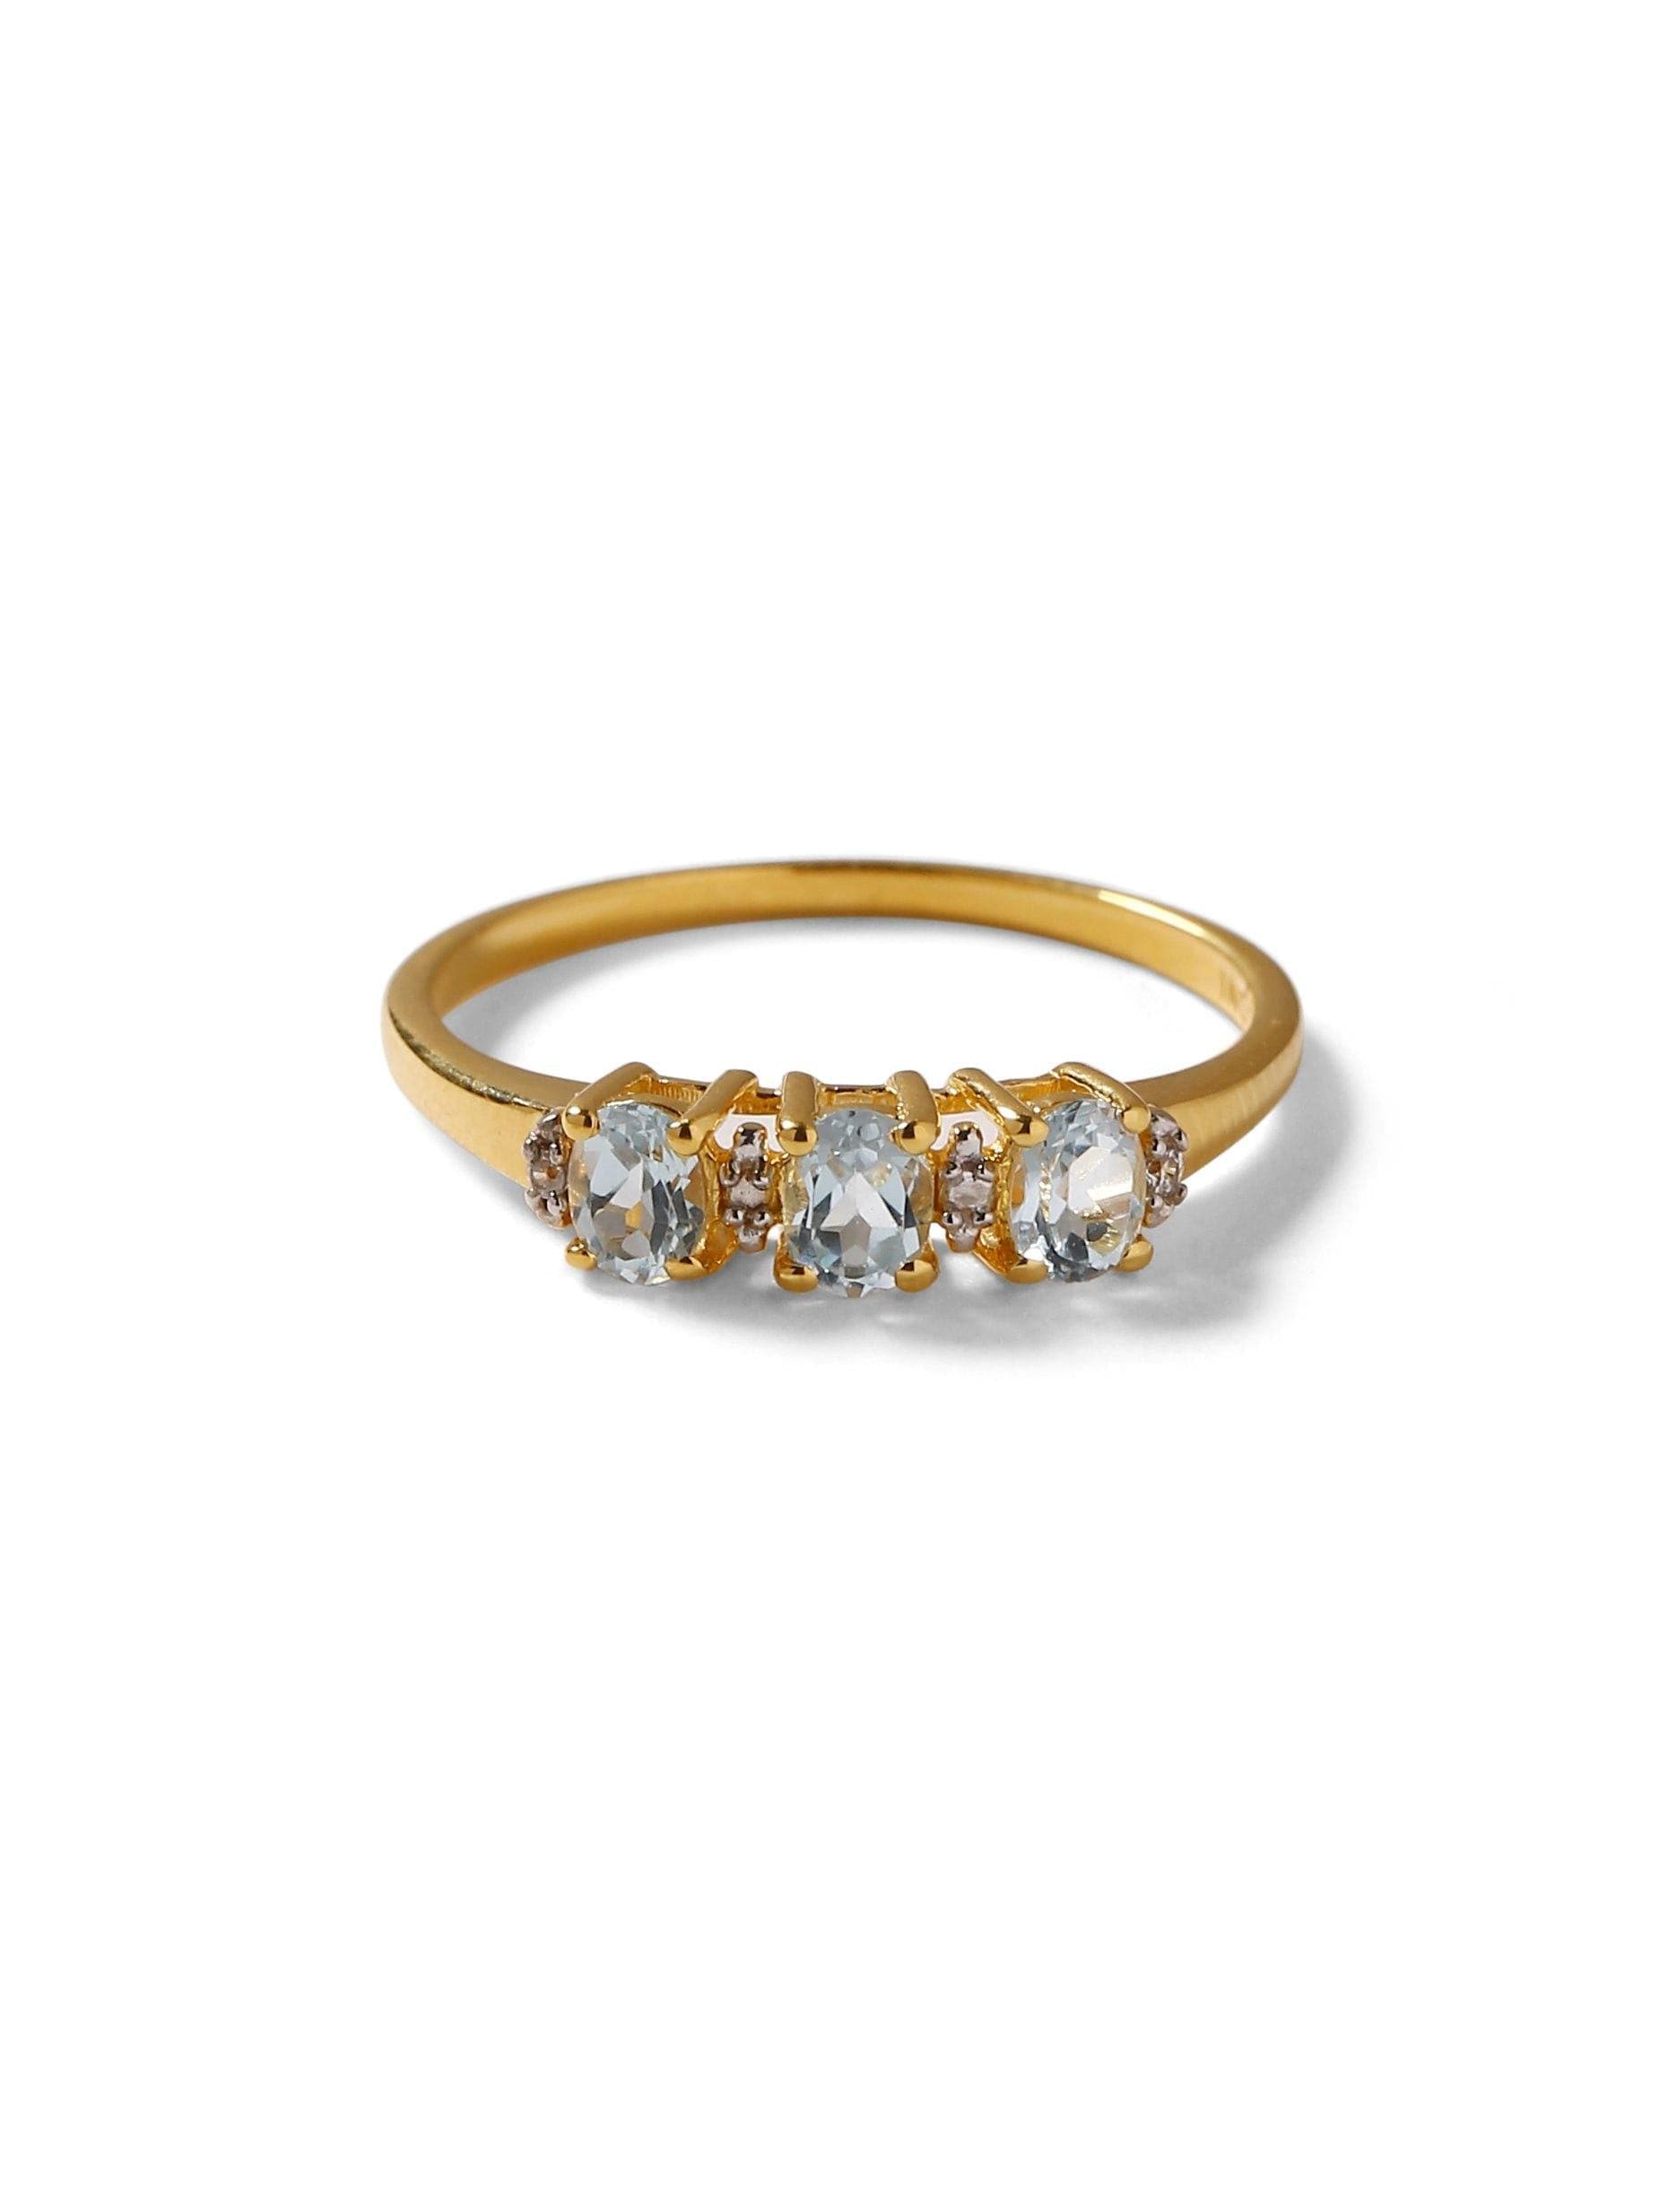 0.46 Ct. Sky Blue Topaz Solid 10k Yellow Gold Ring Jewelry - YoTreasure